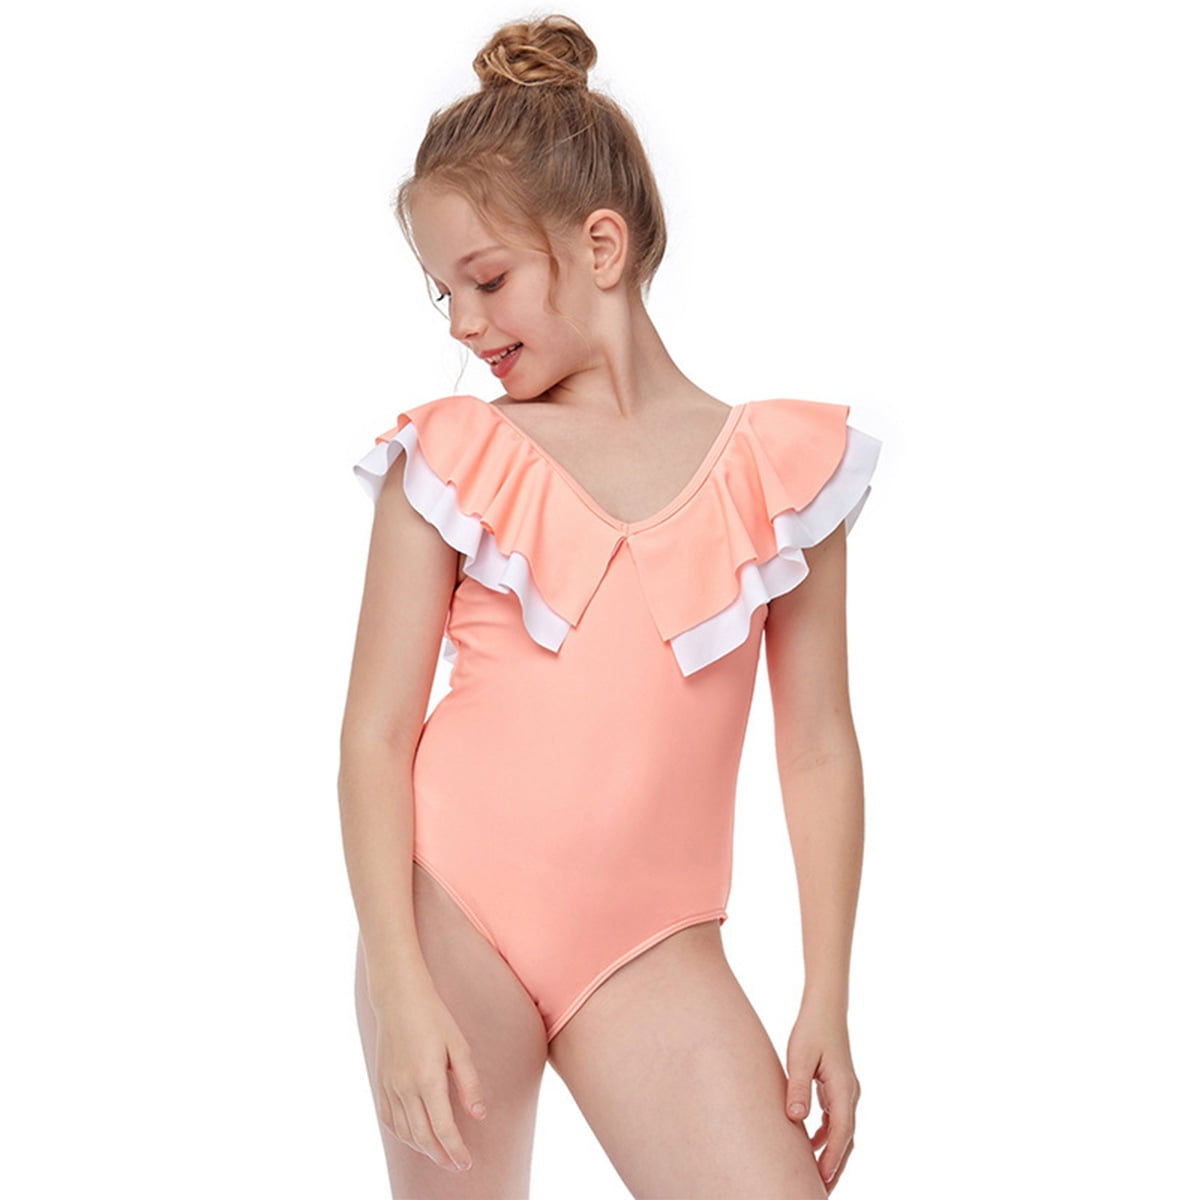 Muasaaluxi Toddler Baby Girls Swimsuit Ruffled Sleeveless Swimwear One-Piece Beachwear Bathing Suit 6M-6Y 